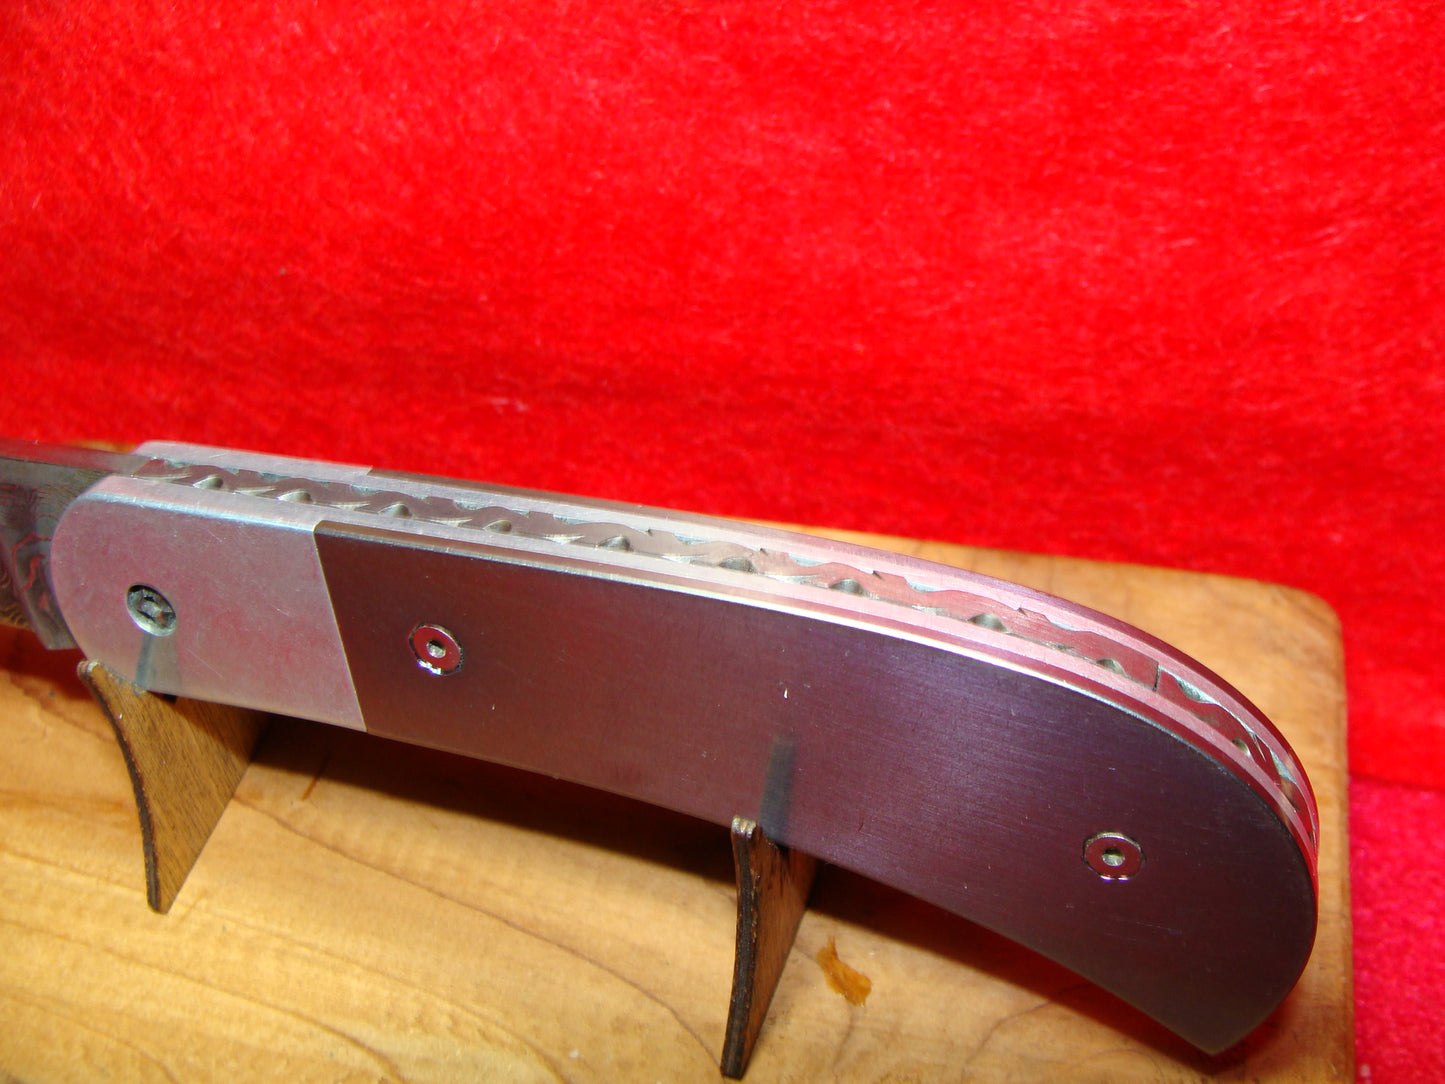 ECHOLS USA 065 CUSTOM SCALE RELEASE DAMASCUS STEEL CUSTOM AUTOMATIC KNIFE ANODIZED TITANIUM HANDLES